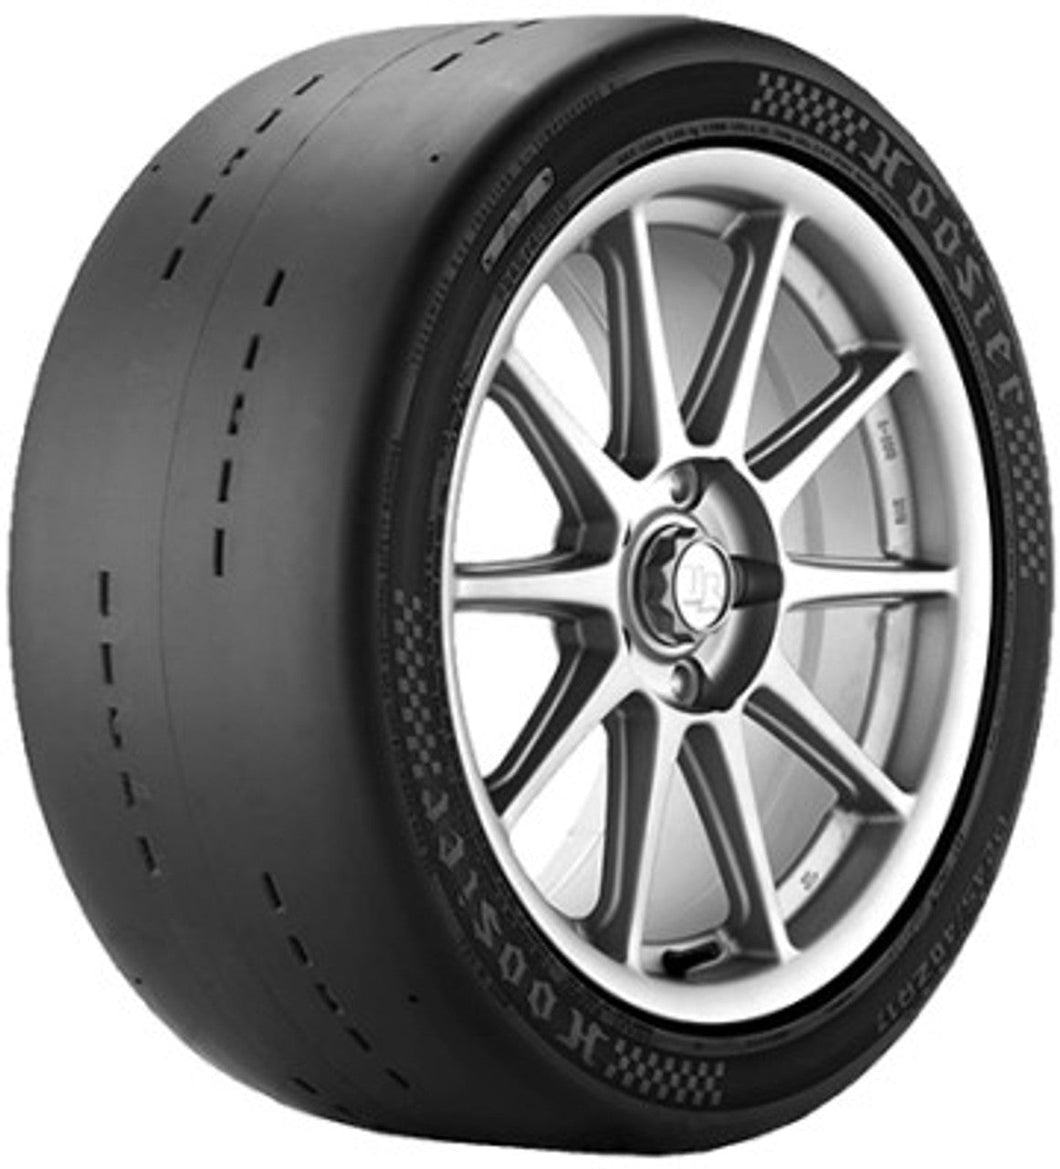 315/35 ZR17 Hoosier Tire Slick D.O.T Neumático